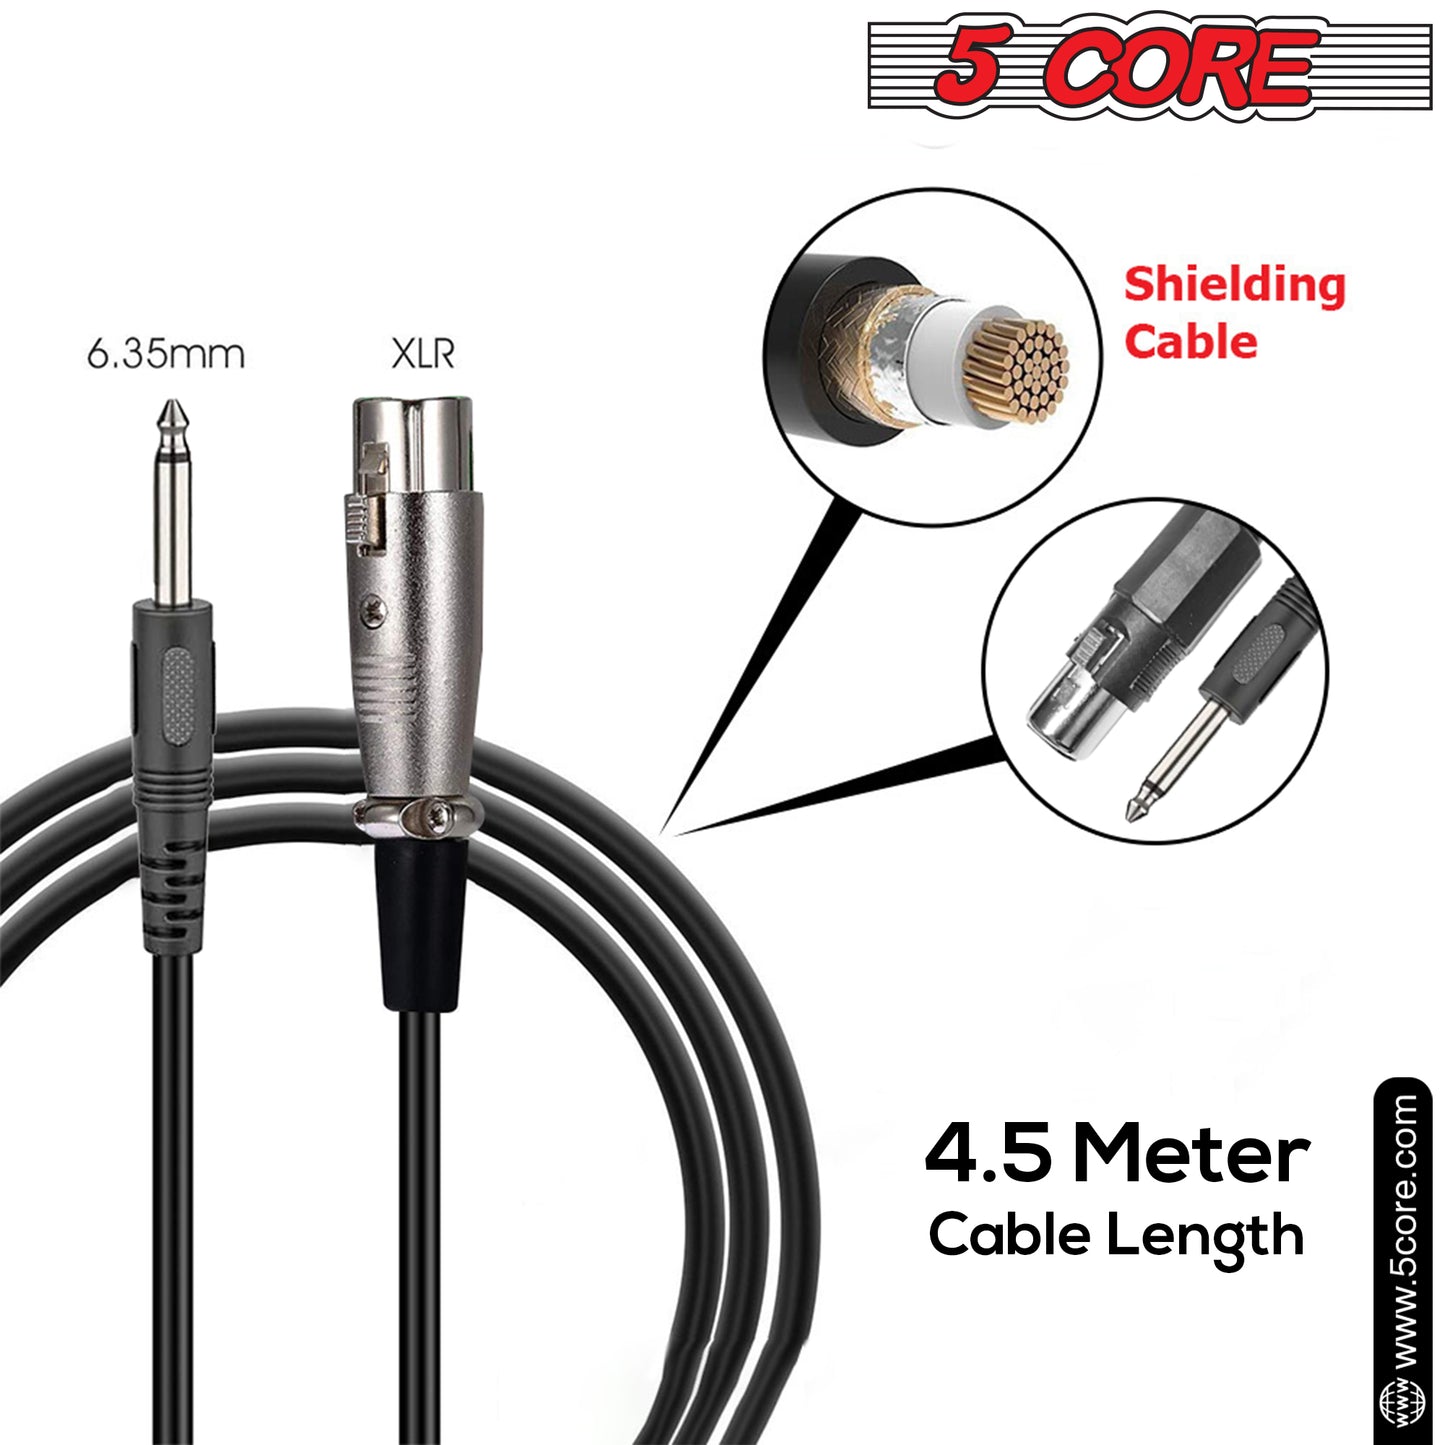 Noise shielded XLR cable